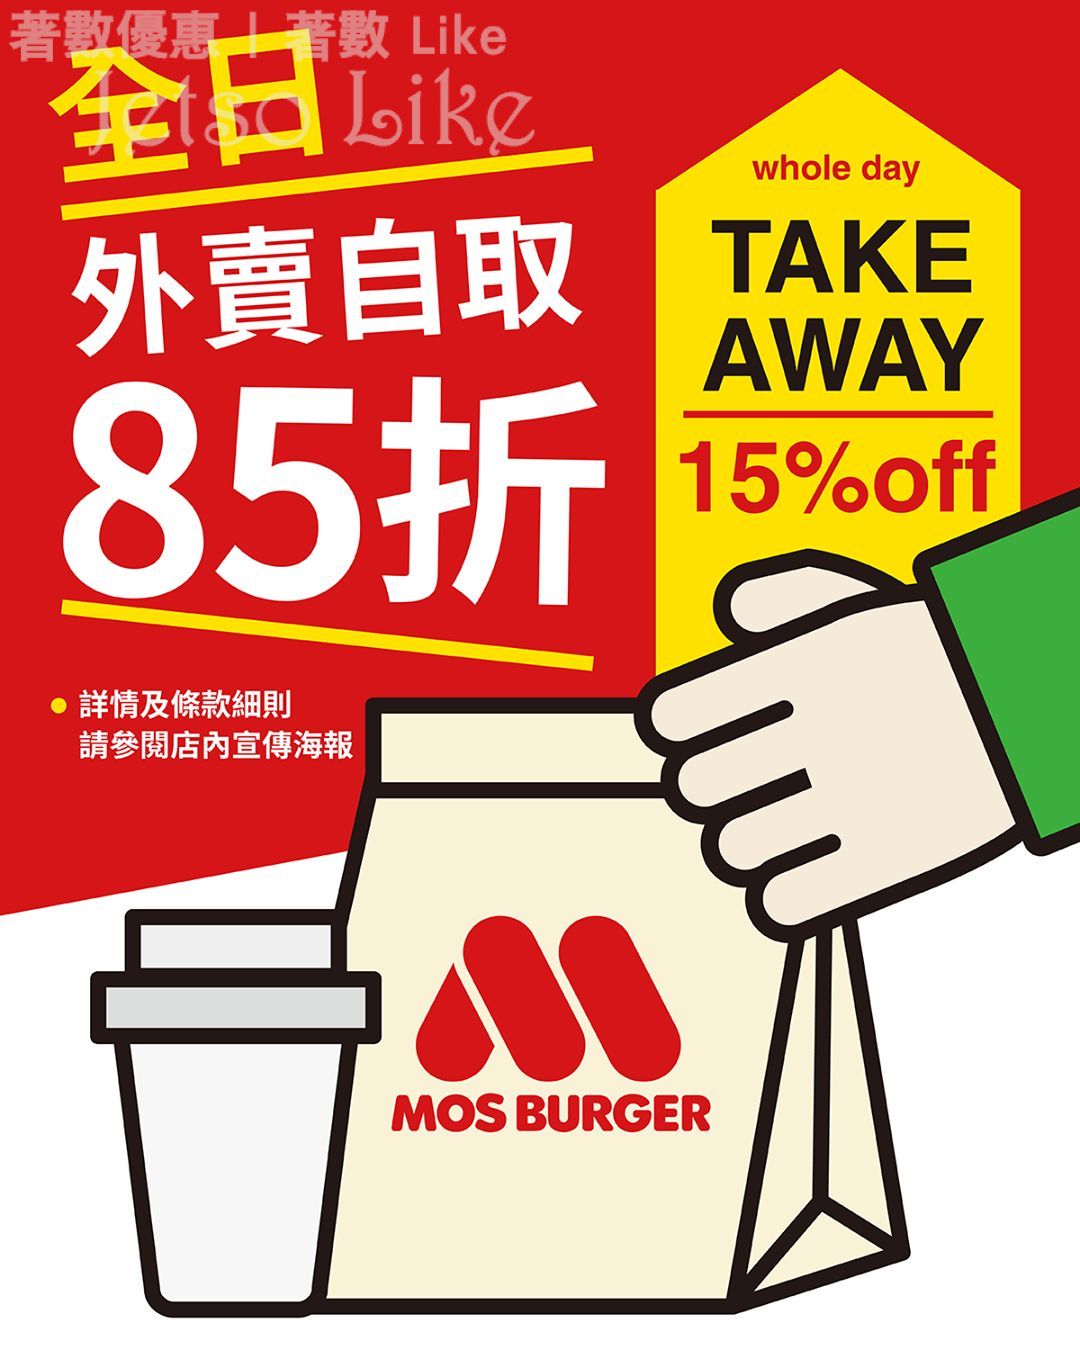 MOS Burger 全日外賣 自取85折